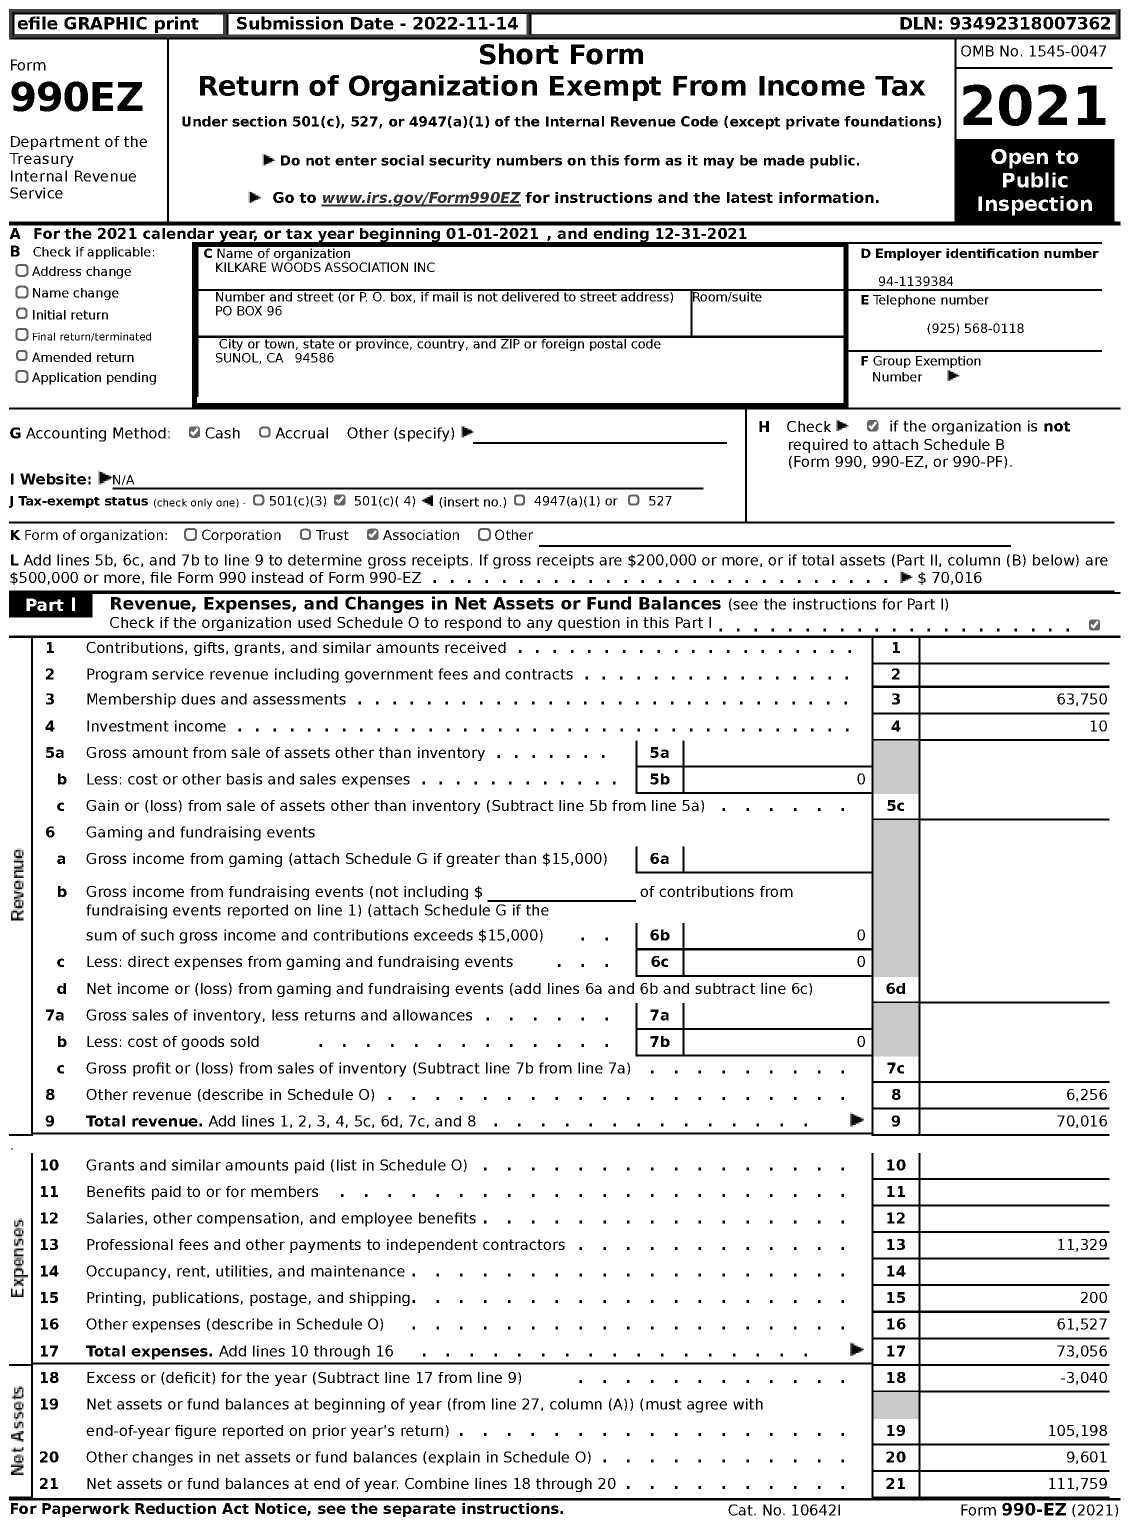 Image of first page of 2021 Form 990EZ for Kilkare Woods Association